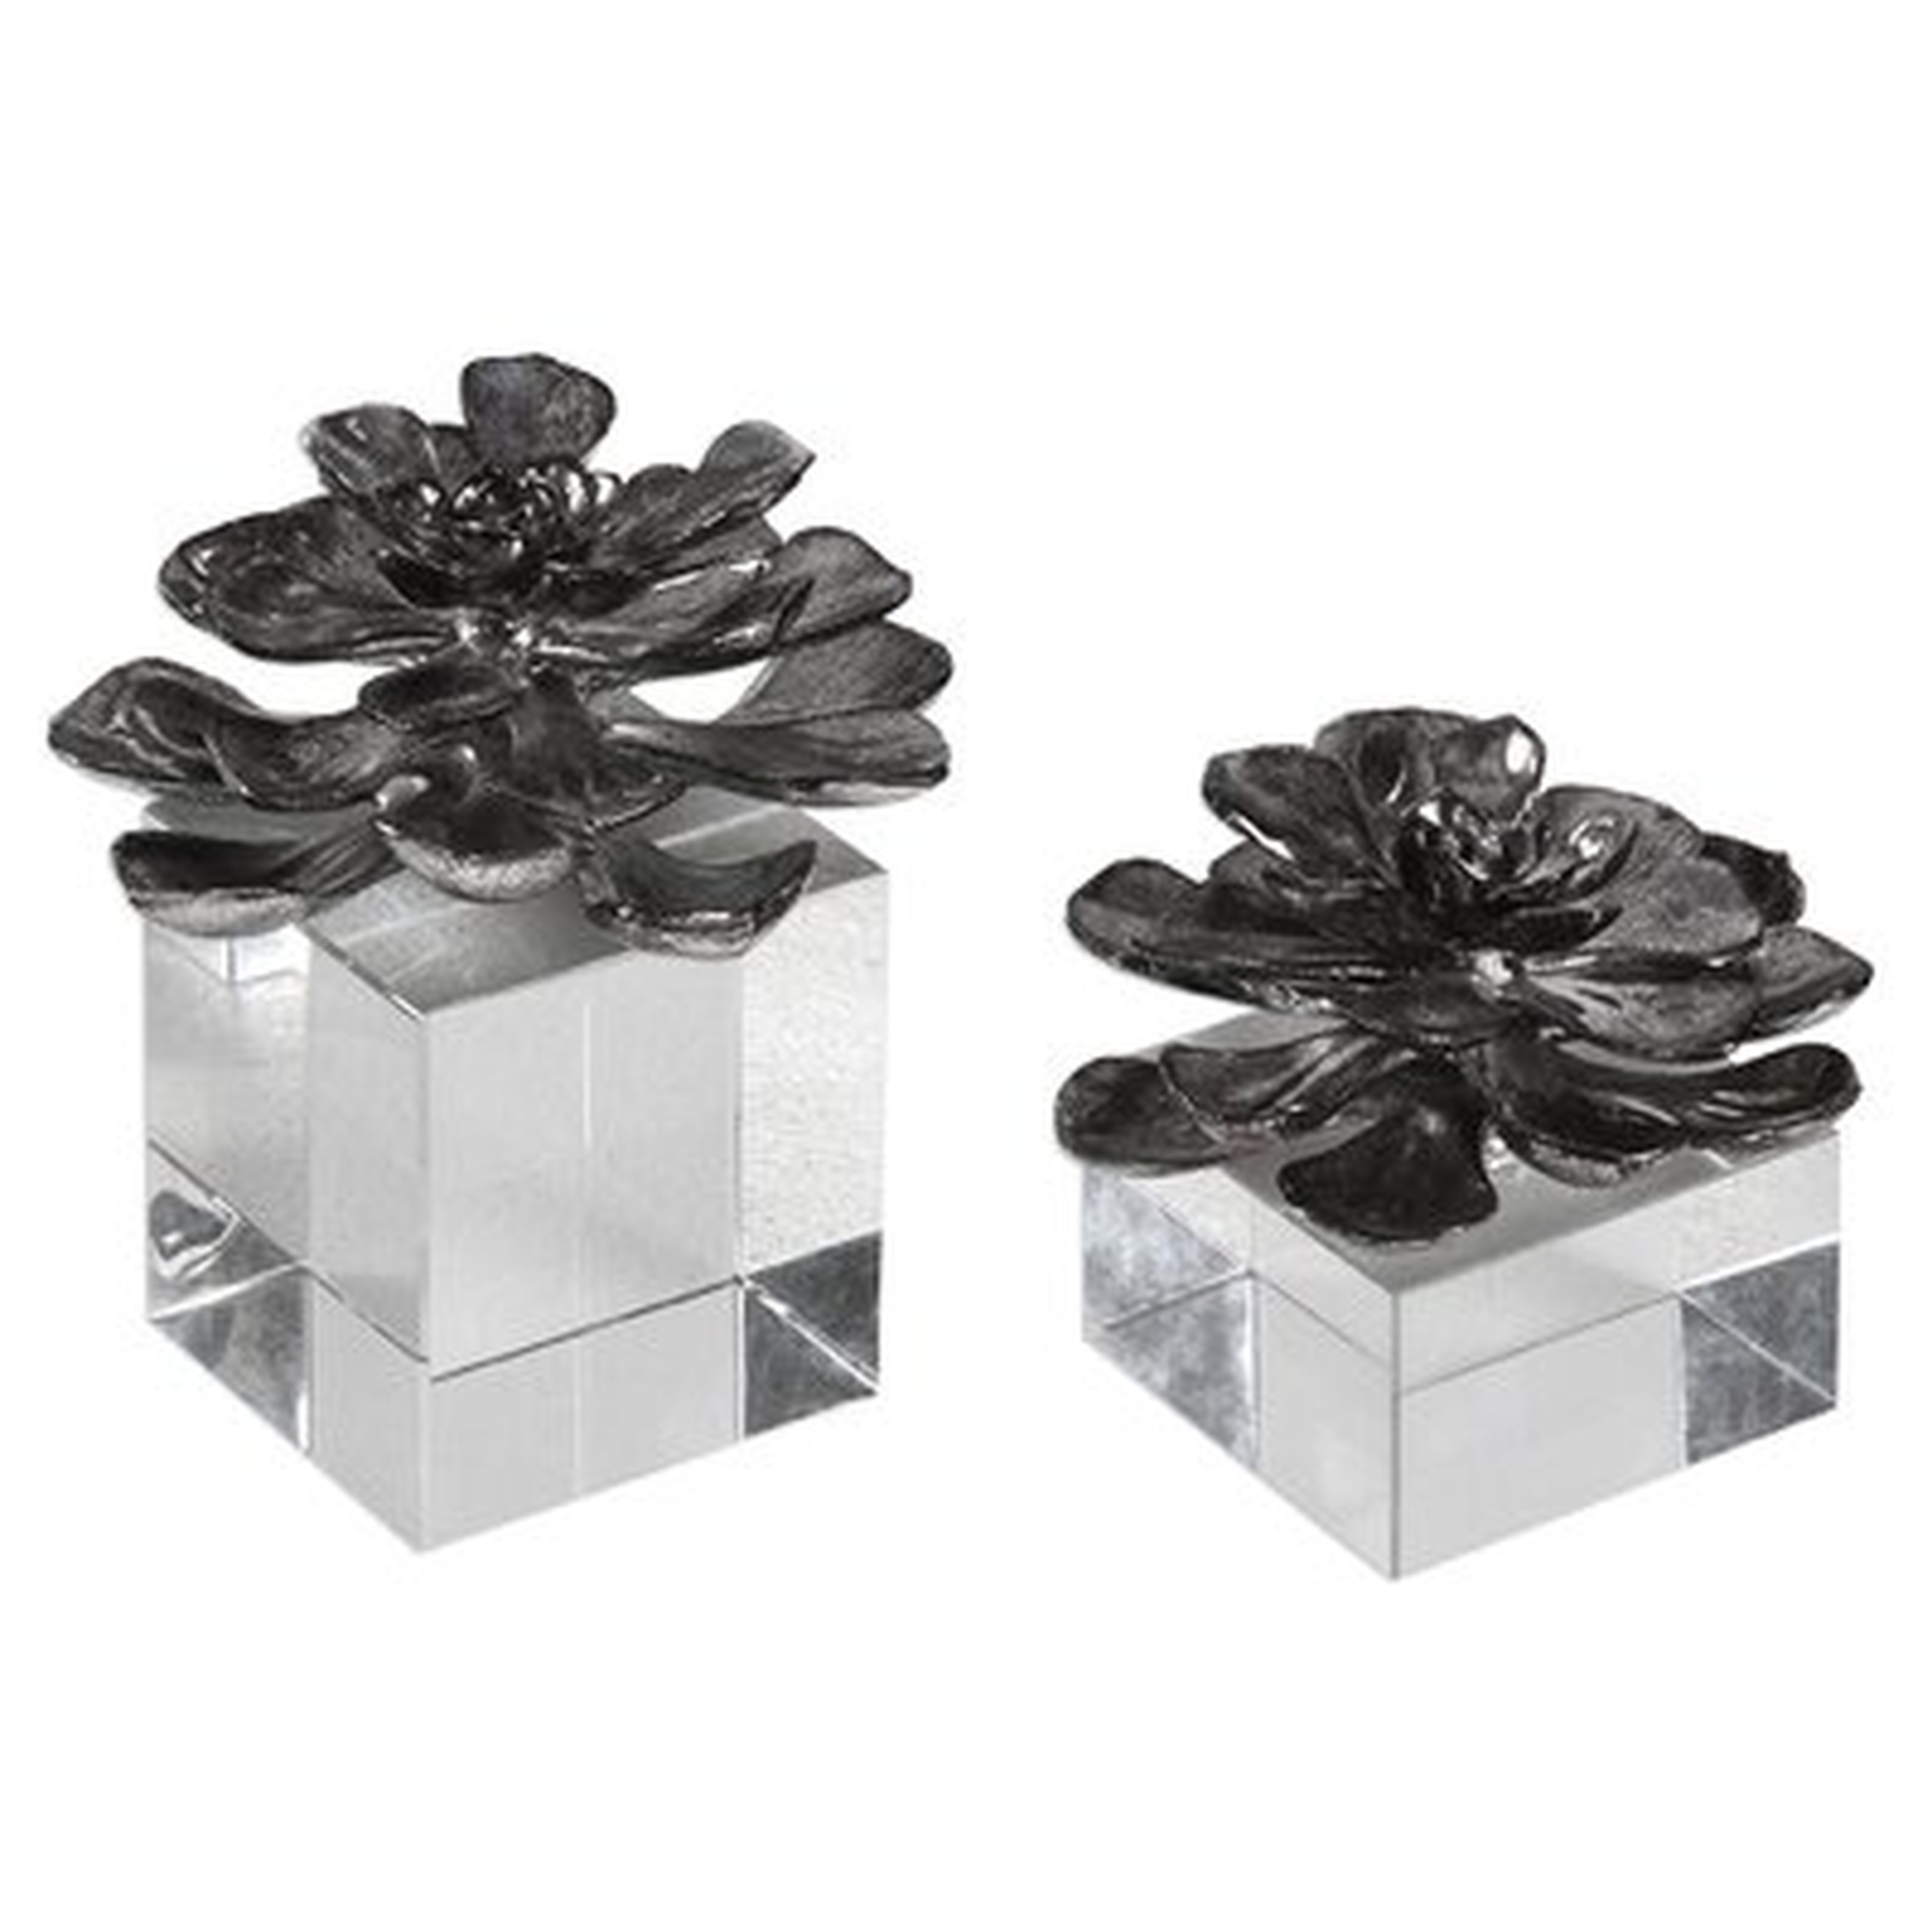 2 Piece Indian Lotus Metallic Flowers Sculpture Set - AllModern